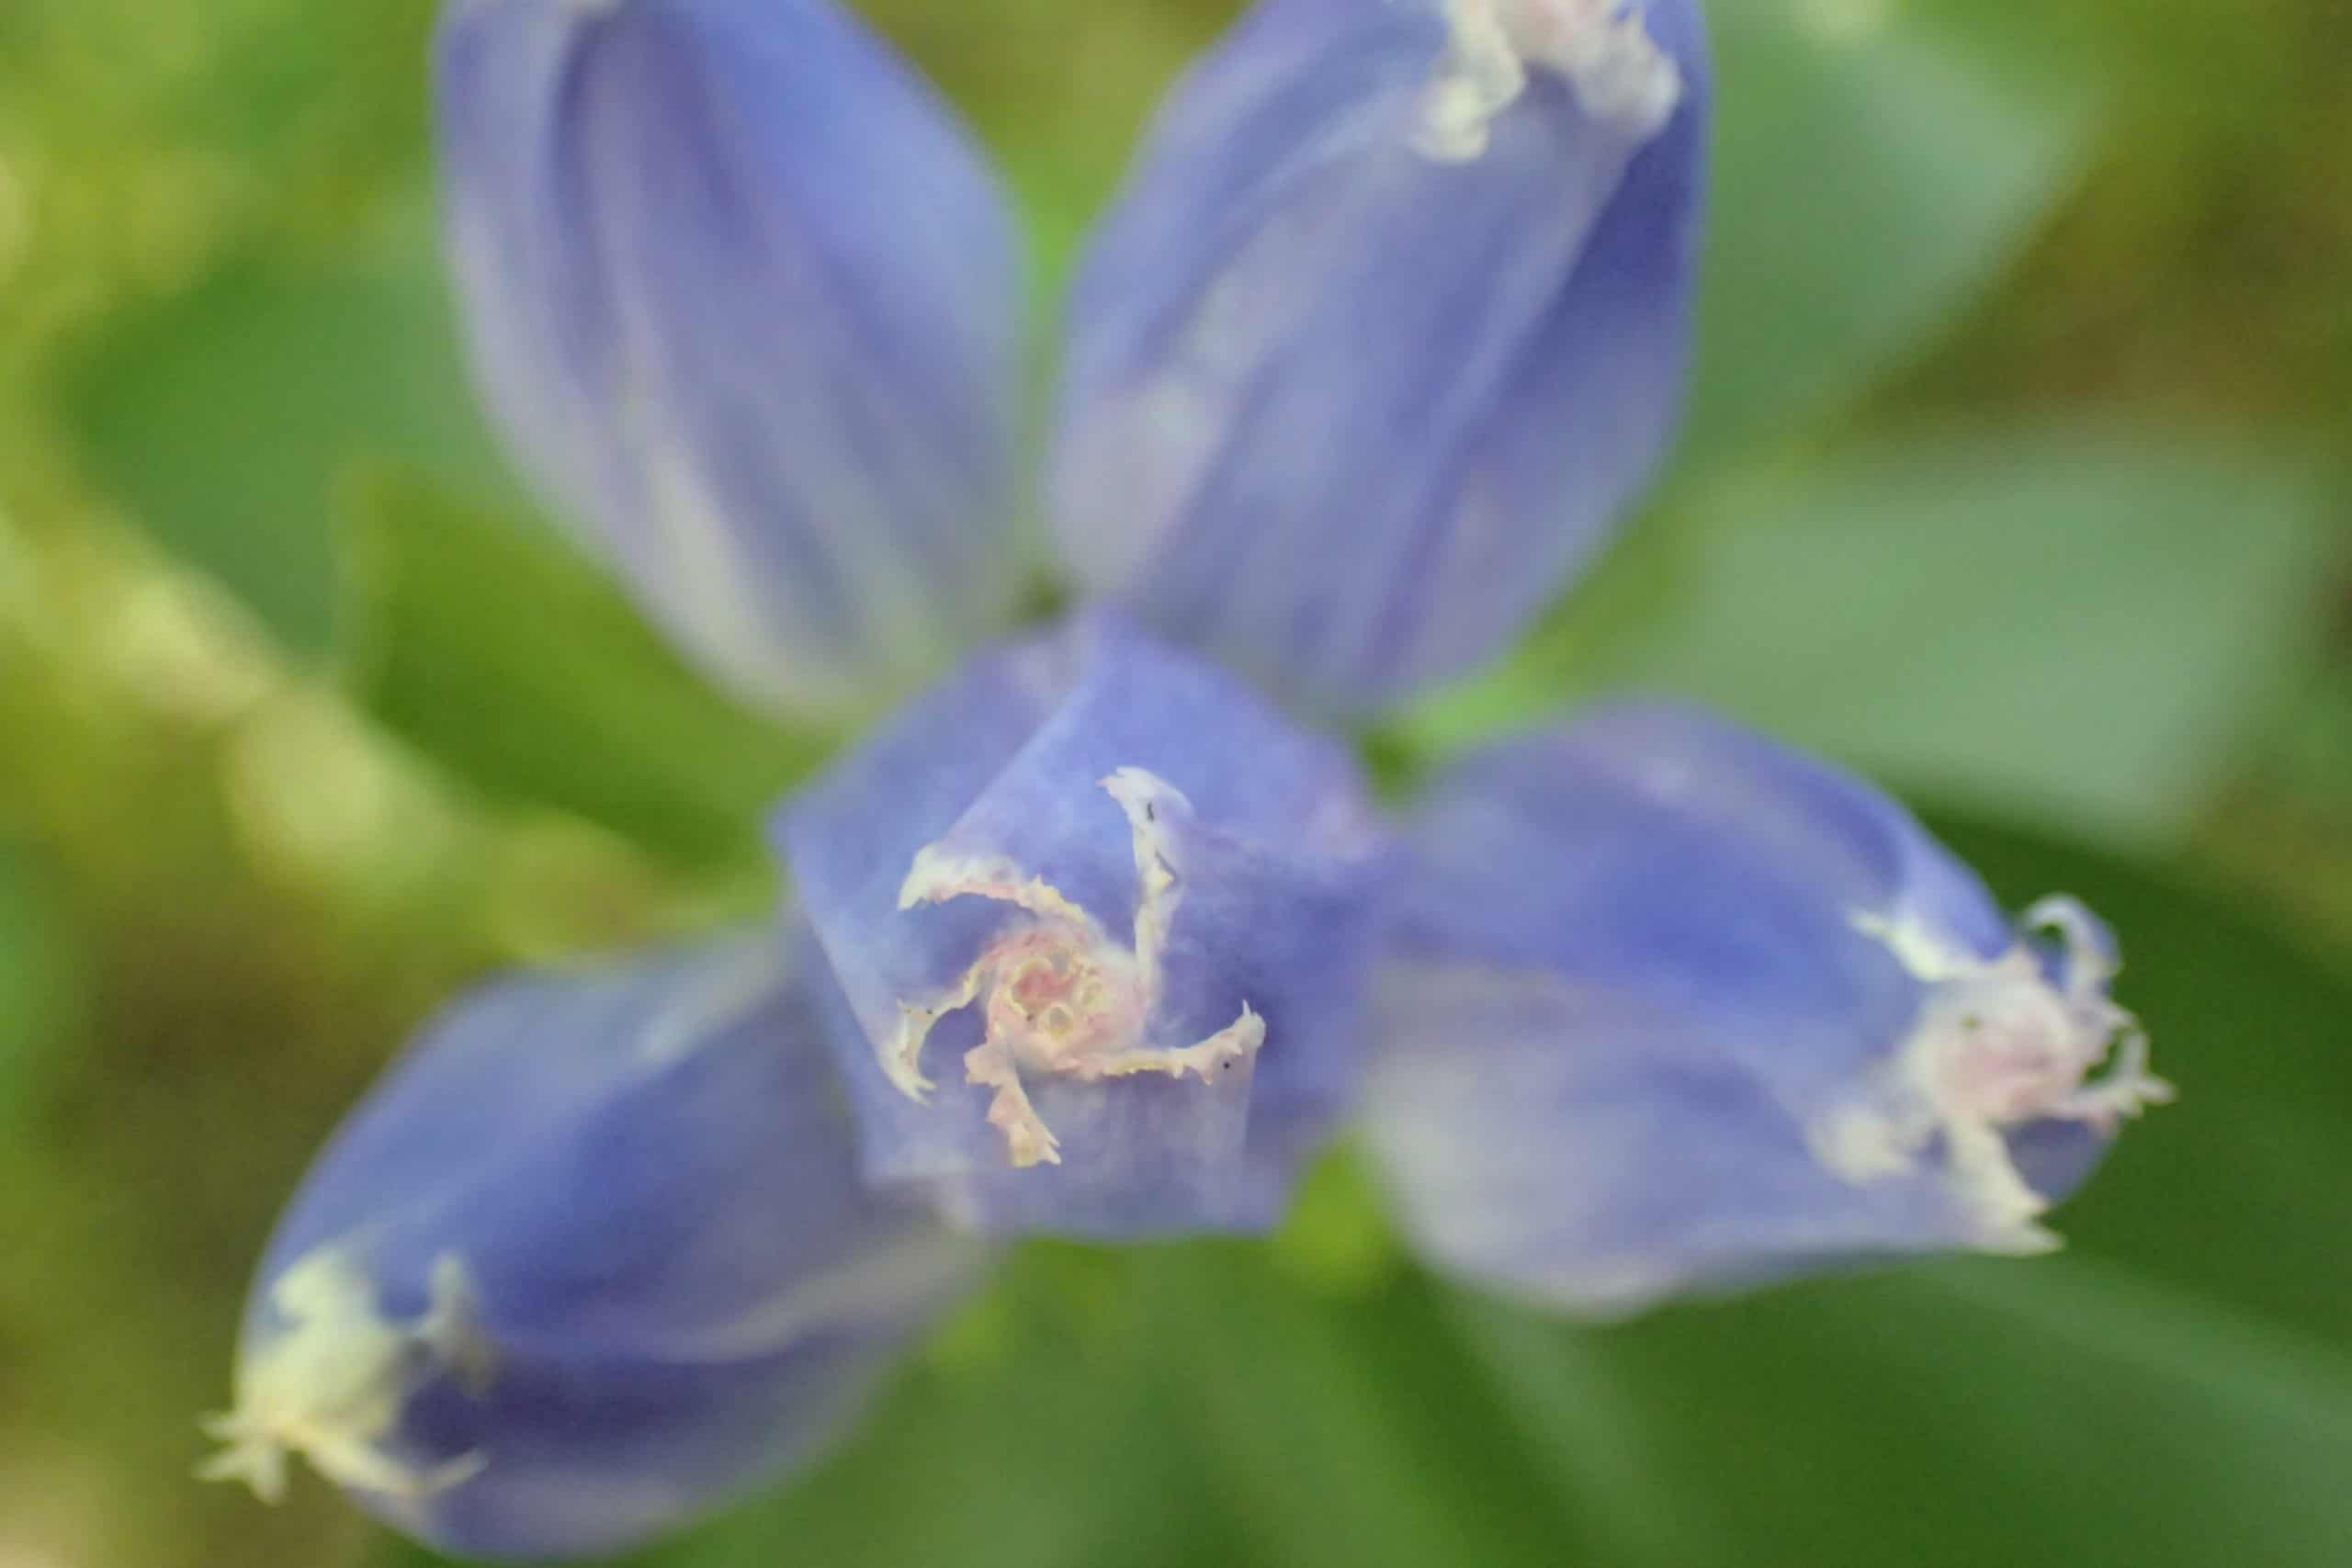 Closed petals of a blue flower form a white pinwheel